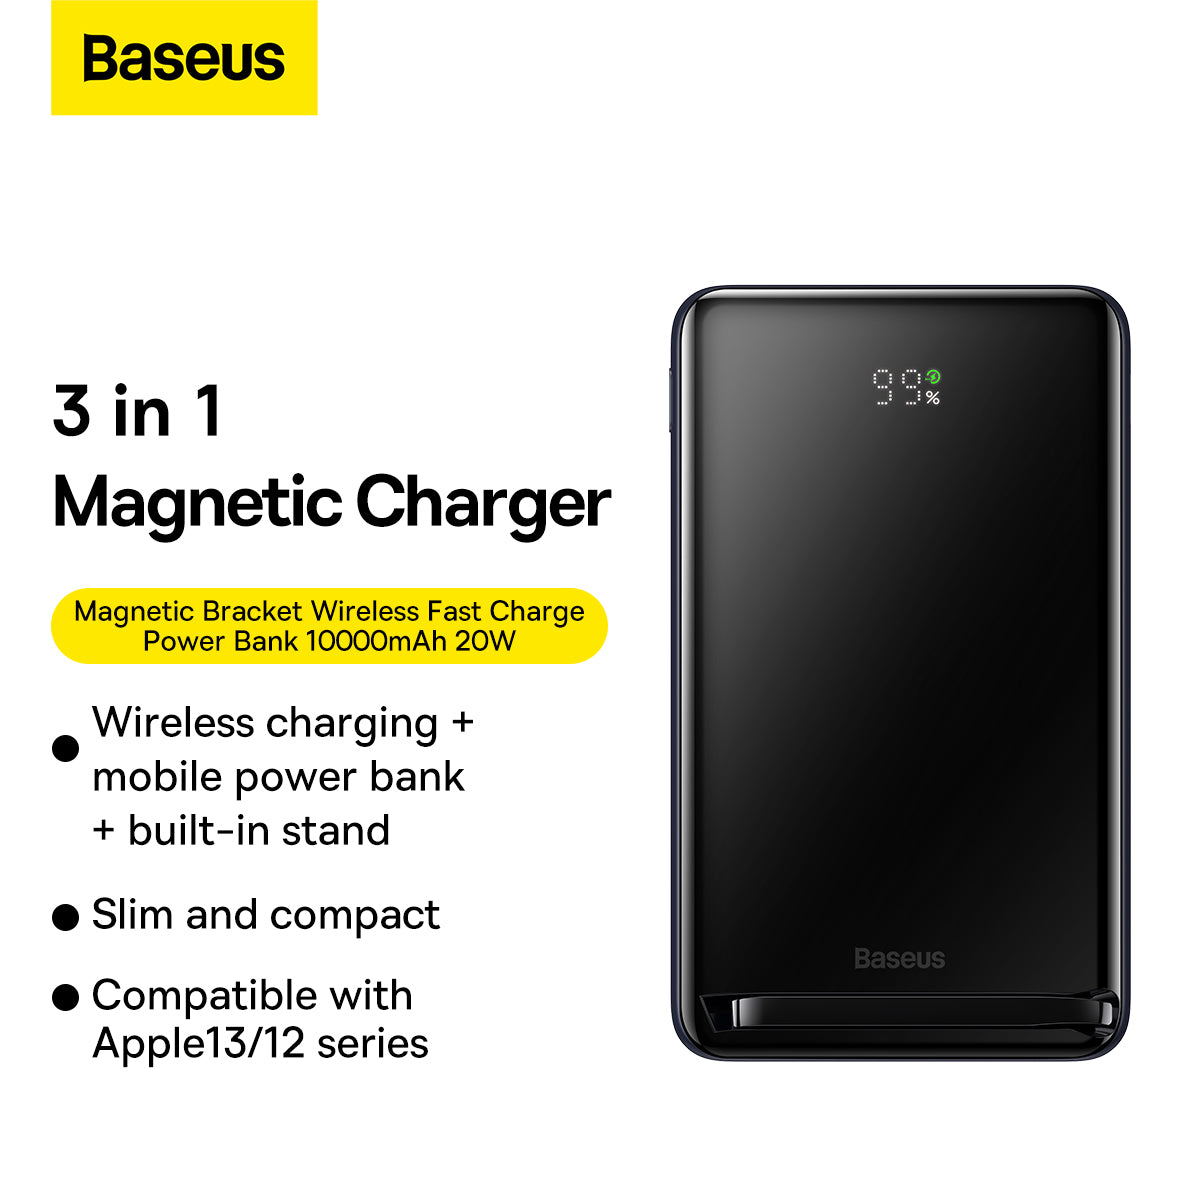 Baseus Magnetic Bracket Wireless Fast Charge Power Bank 10000mAh 20W Blue Overseas Edition